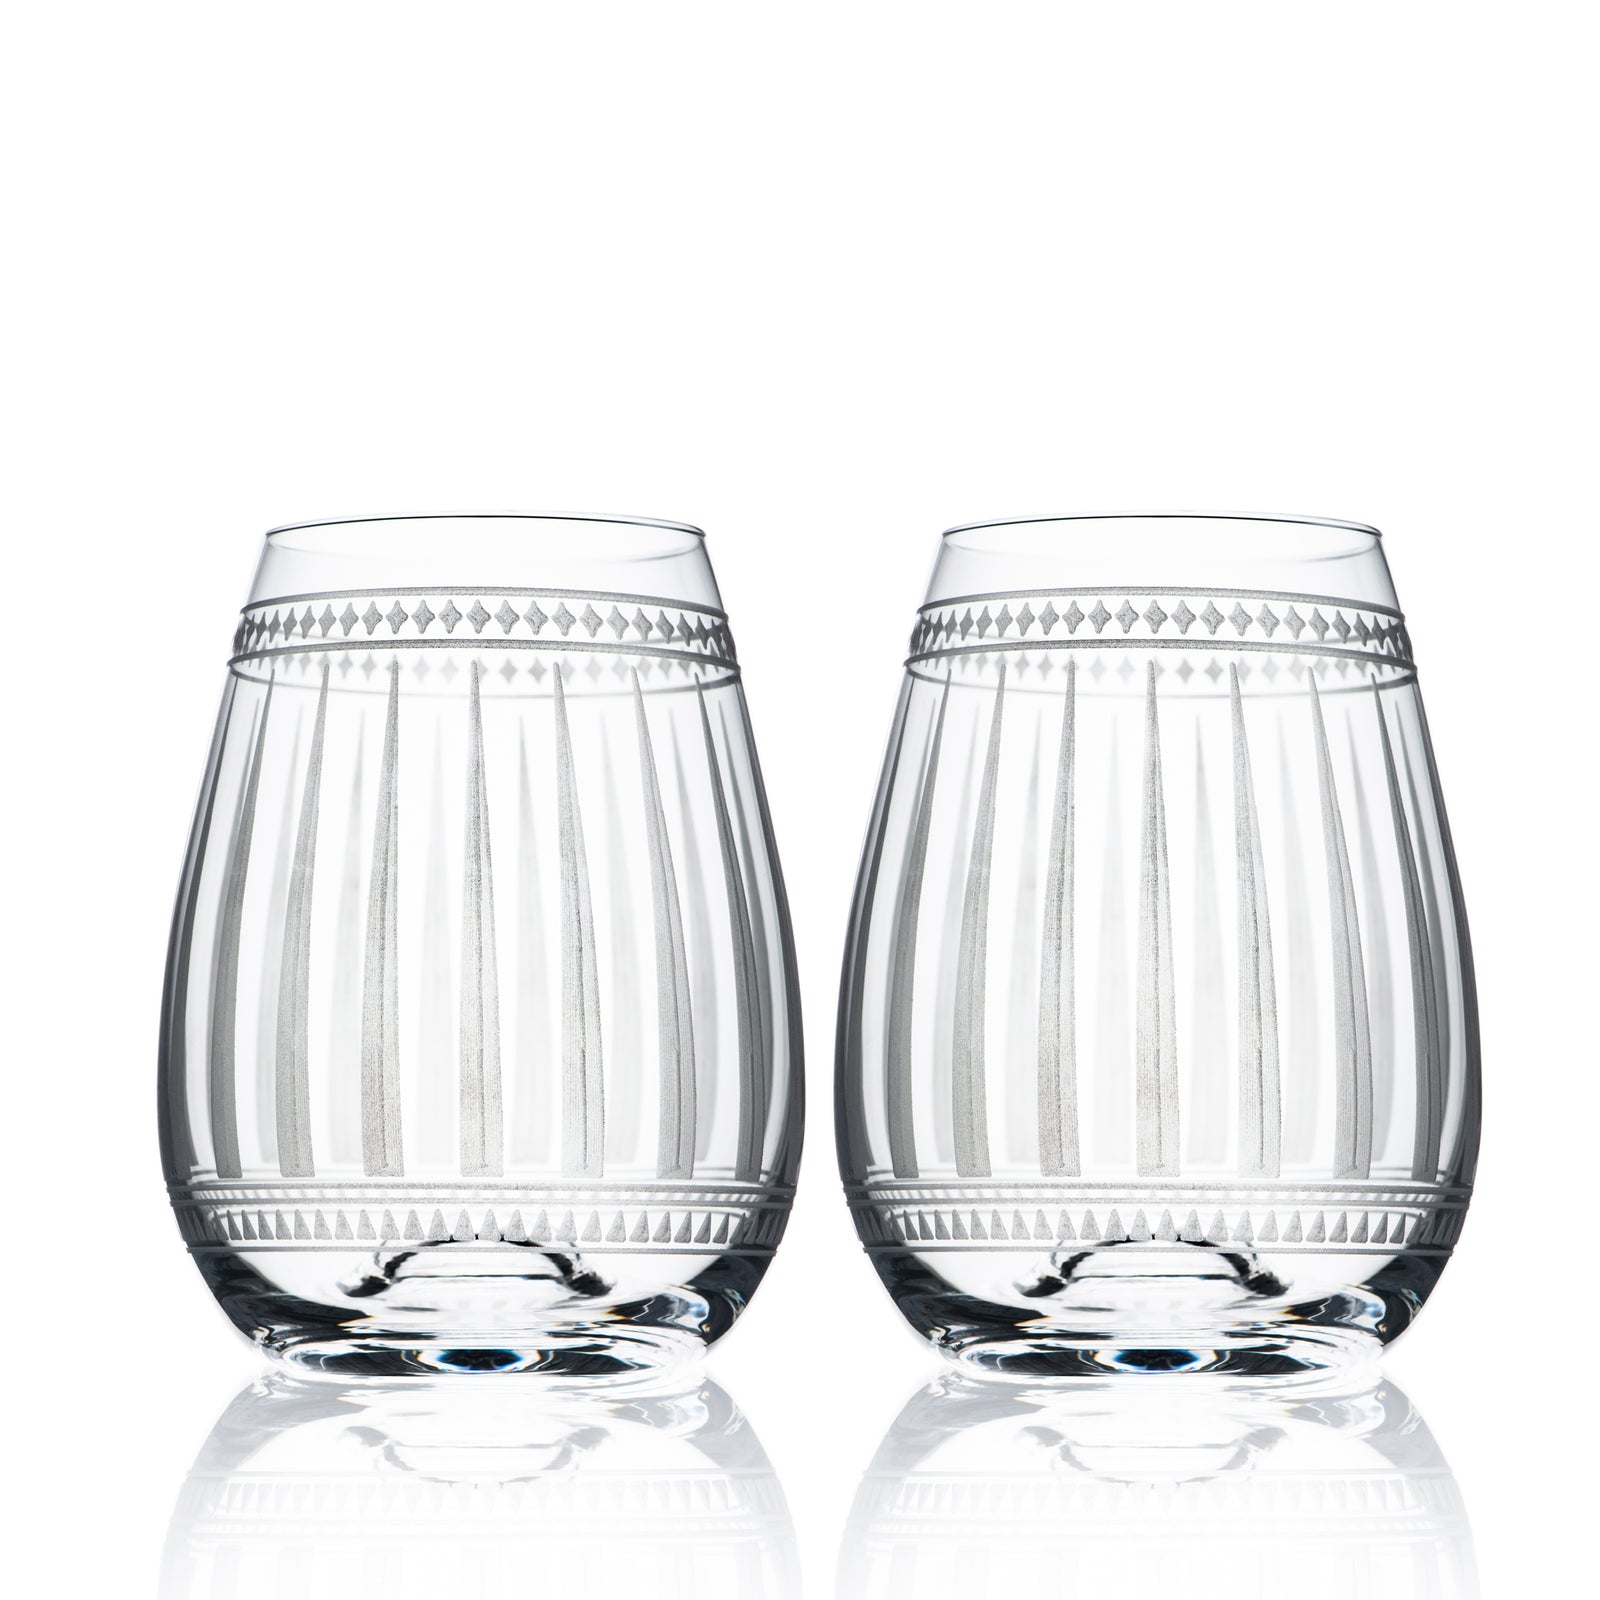 Caskata Phoebe Clear Stemless Wine Glasses, Set of 2